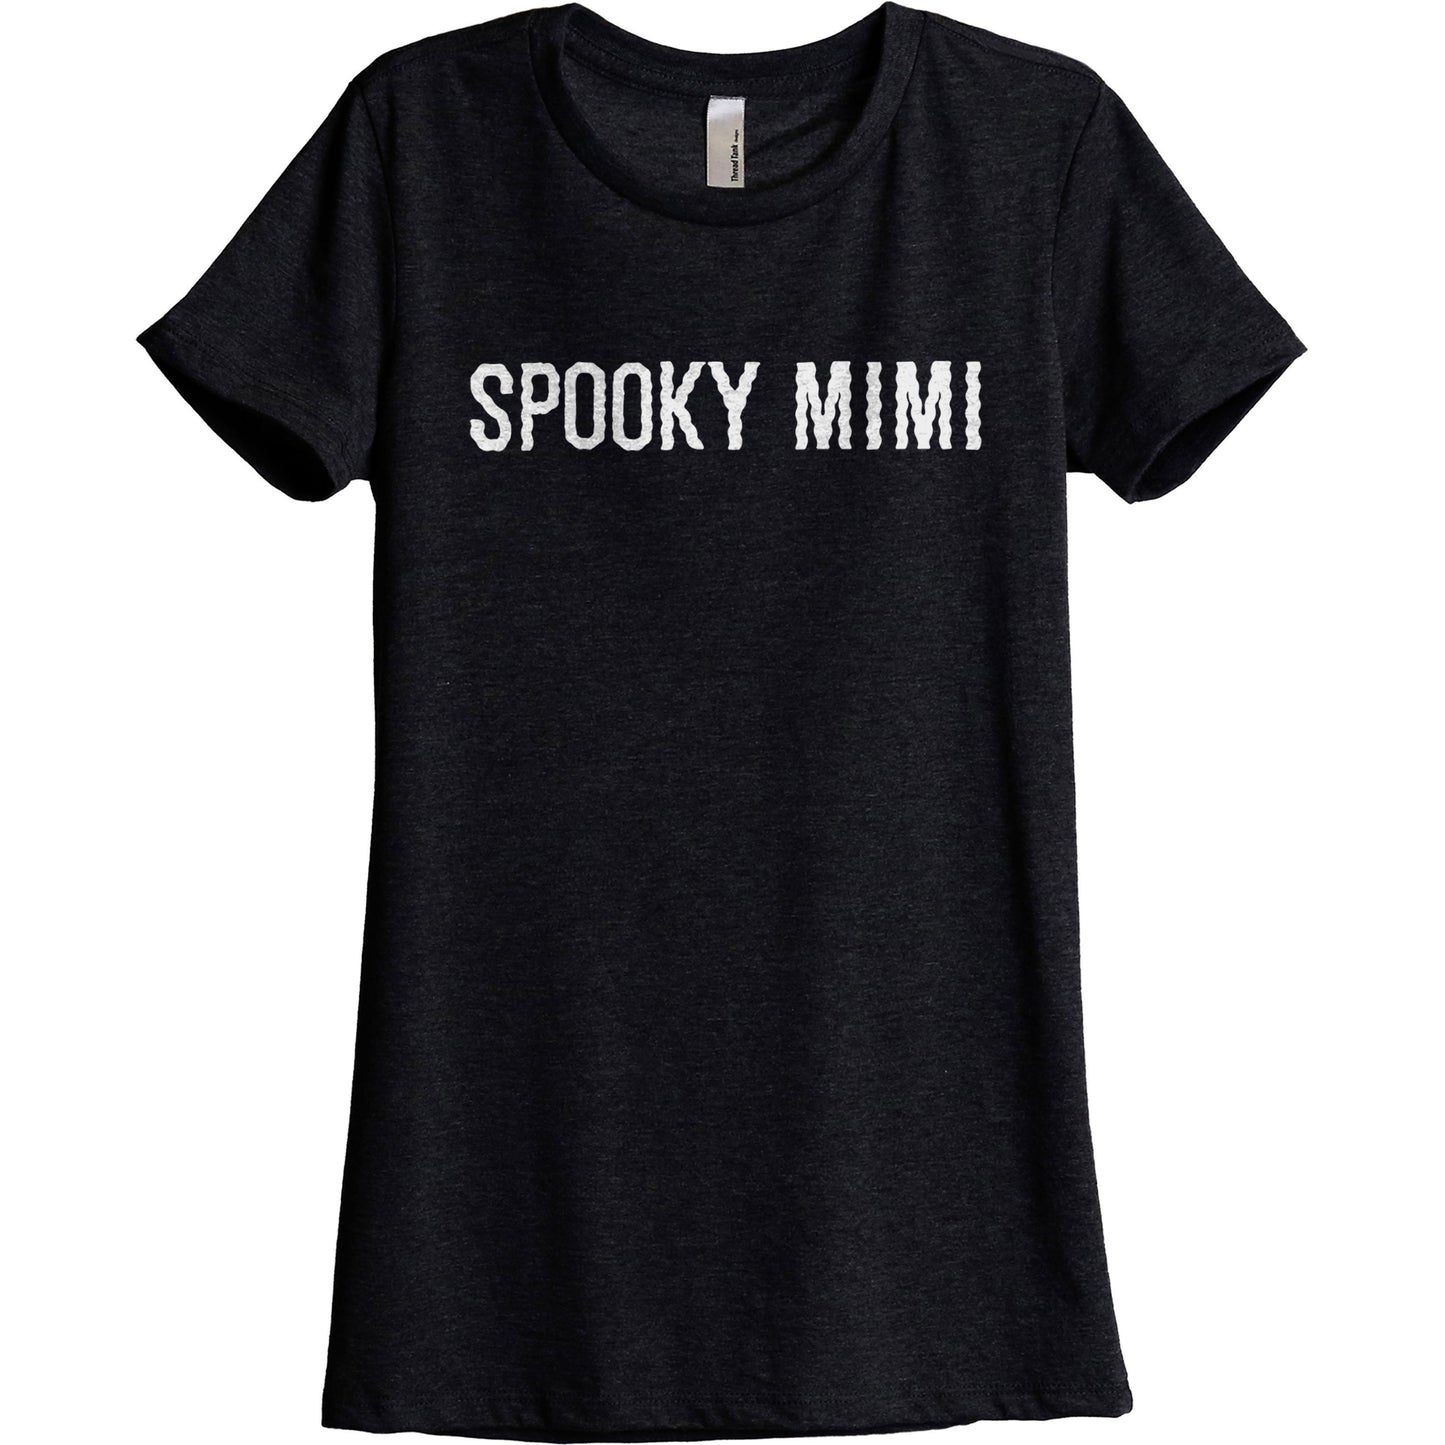 Spooky Mimi - thread tank | Stories you can wear.